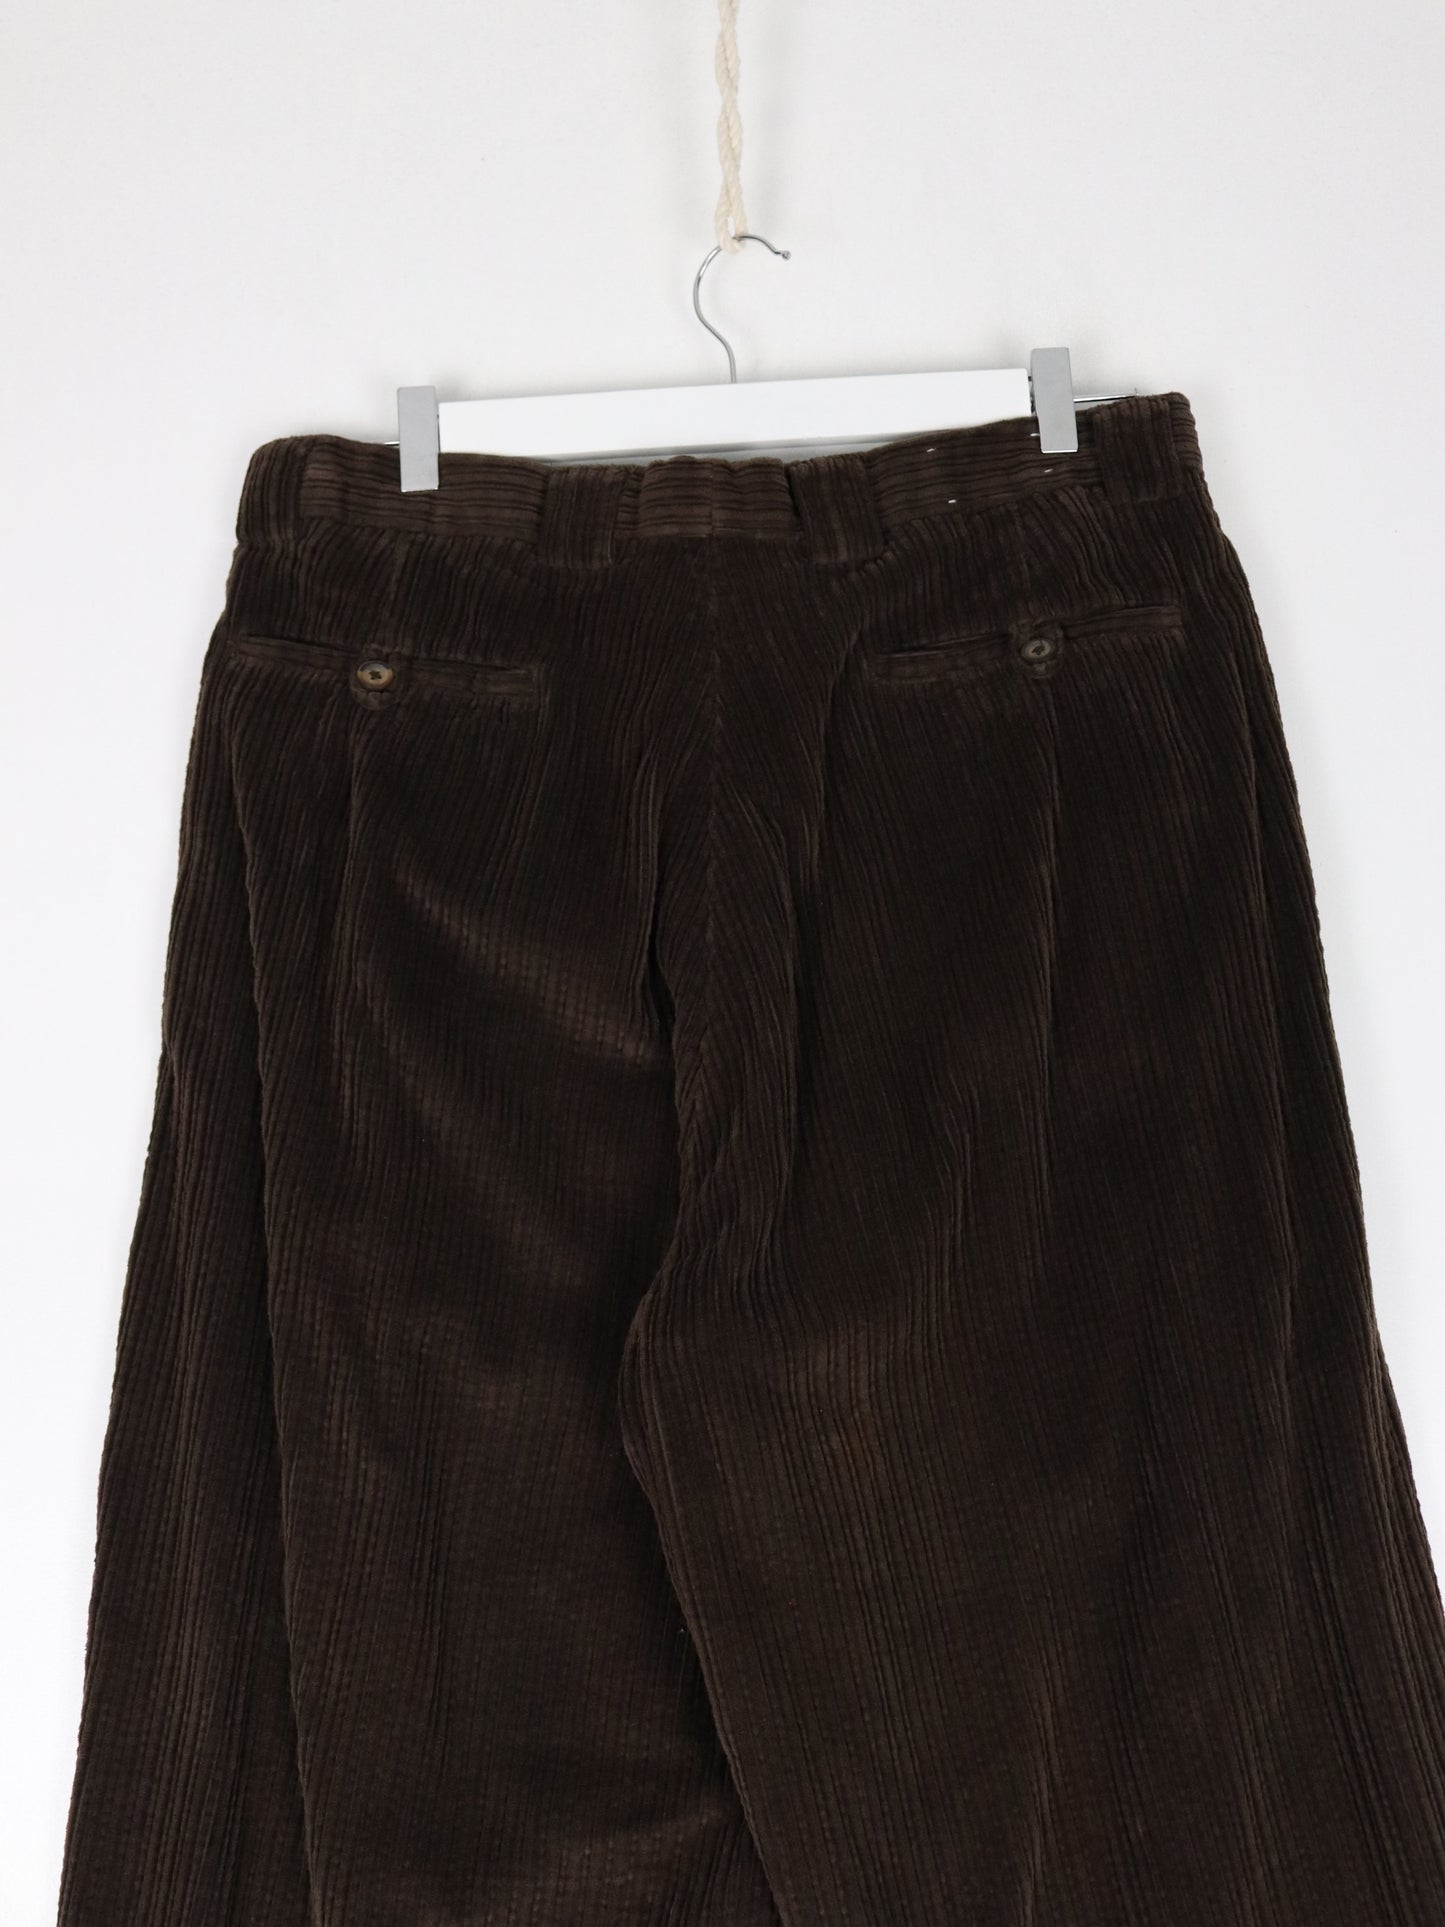 Vintage Henry Grethel Pants Fits Mens 32 x 30 Brown Corduroy Trousers